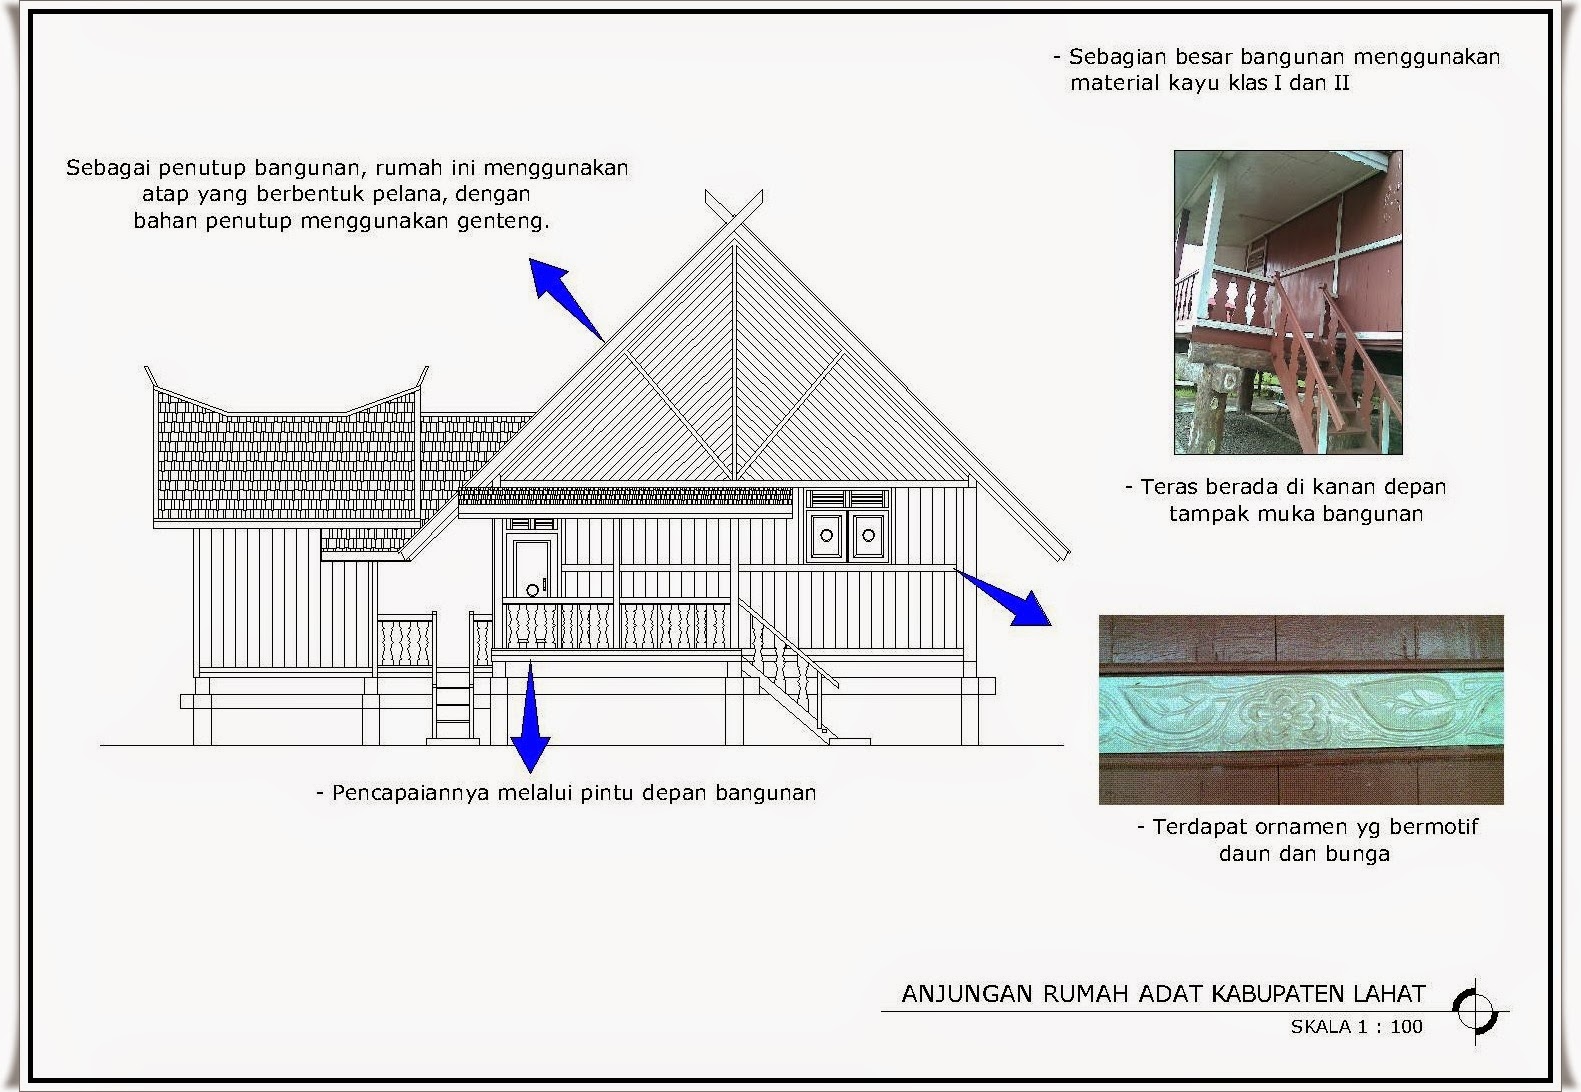  Rumah  Adat yang ada di Propinsi Sumatera Selatan Home 